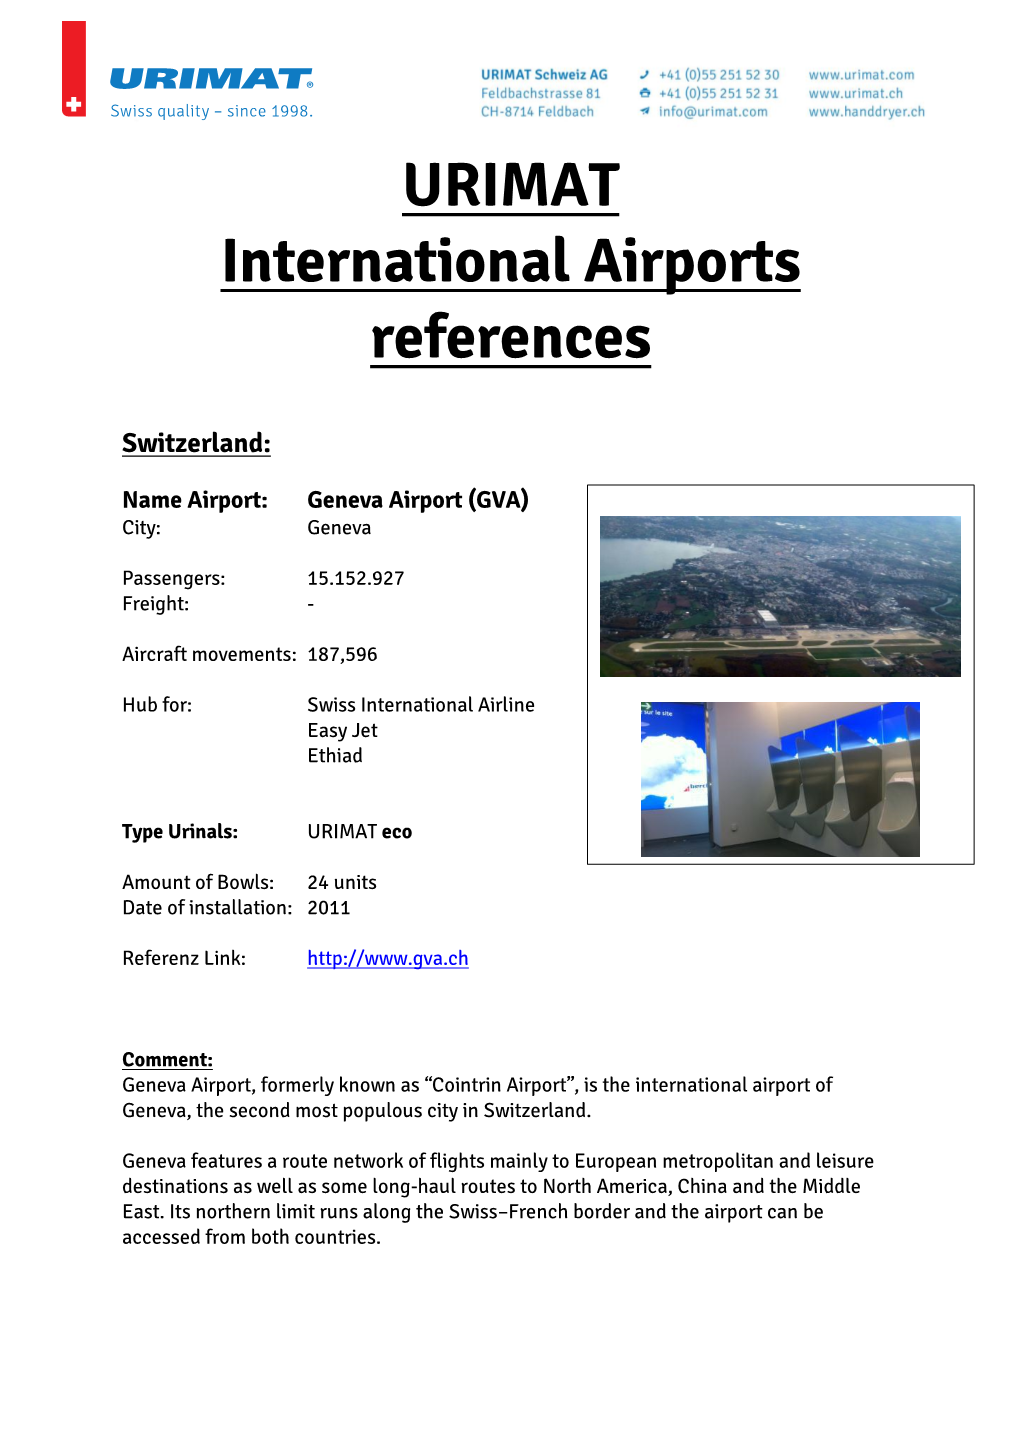 URIMAT International Airports References